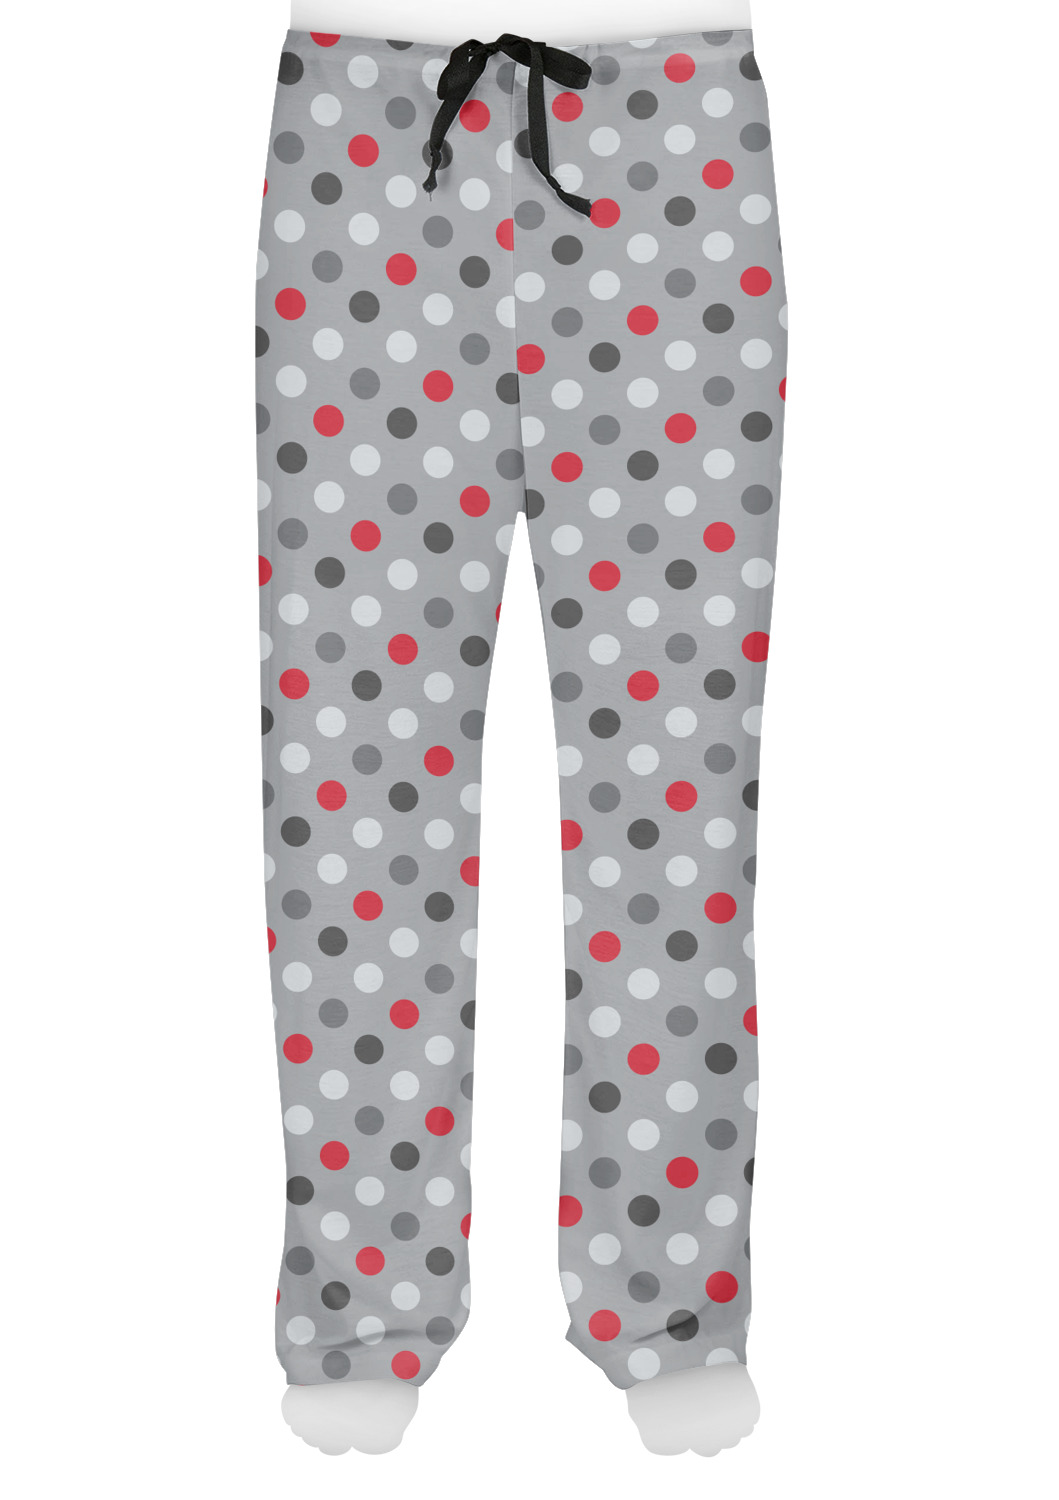 Custom Red & Gray Polka Dots Mens Pajama Pants - S | YouCustomizeIt